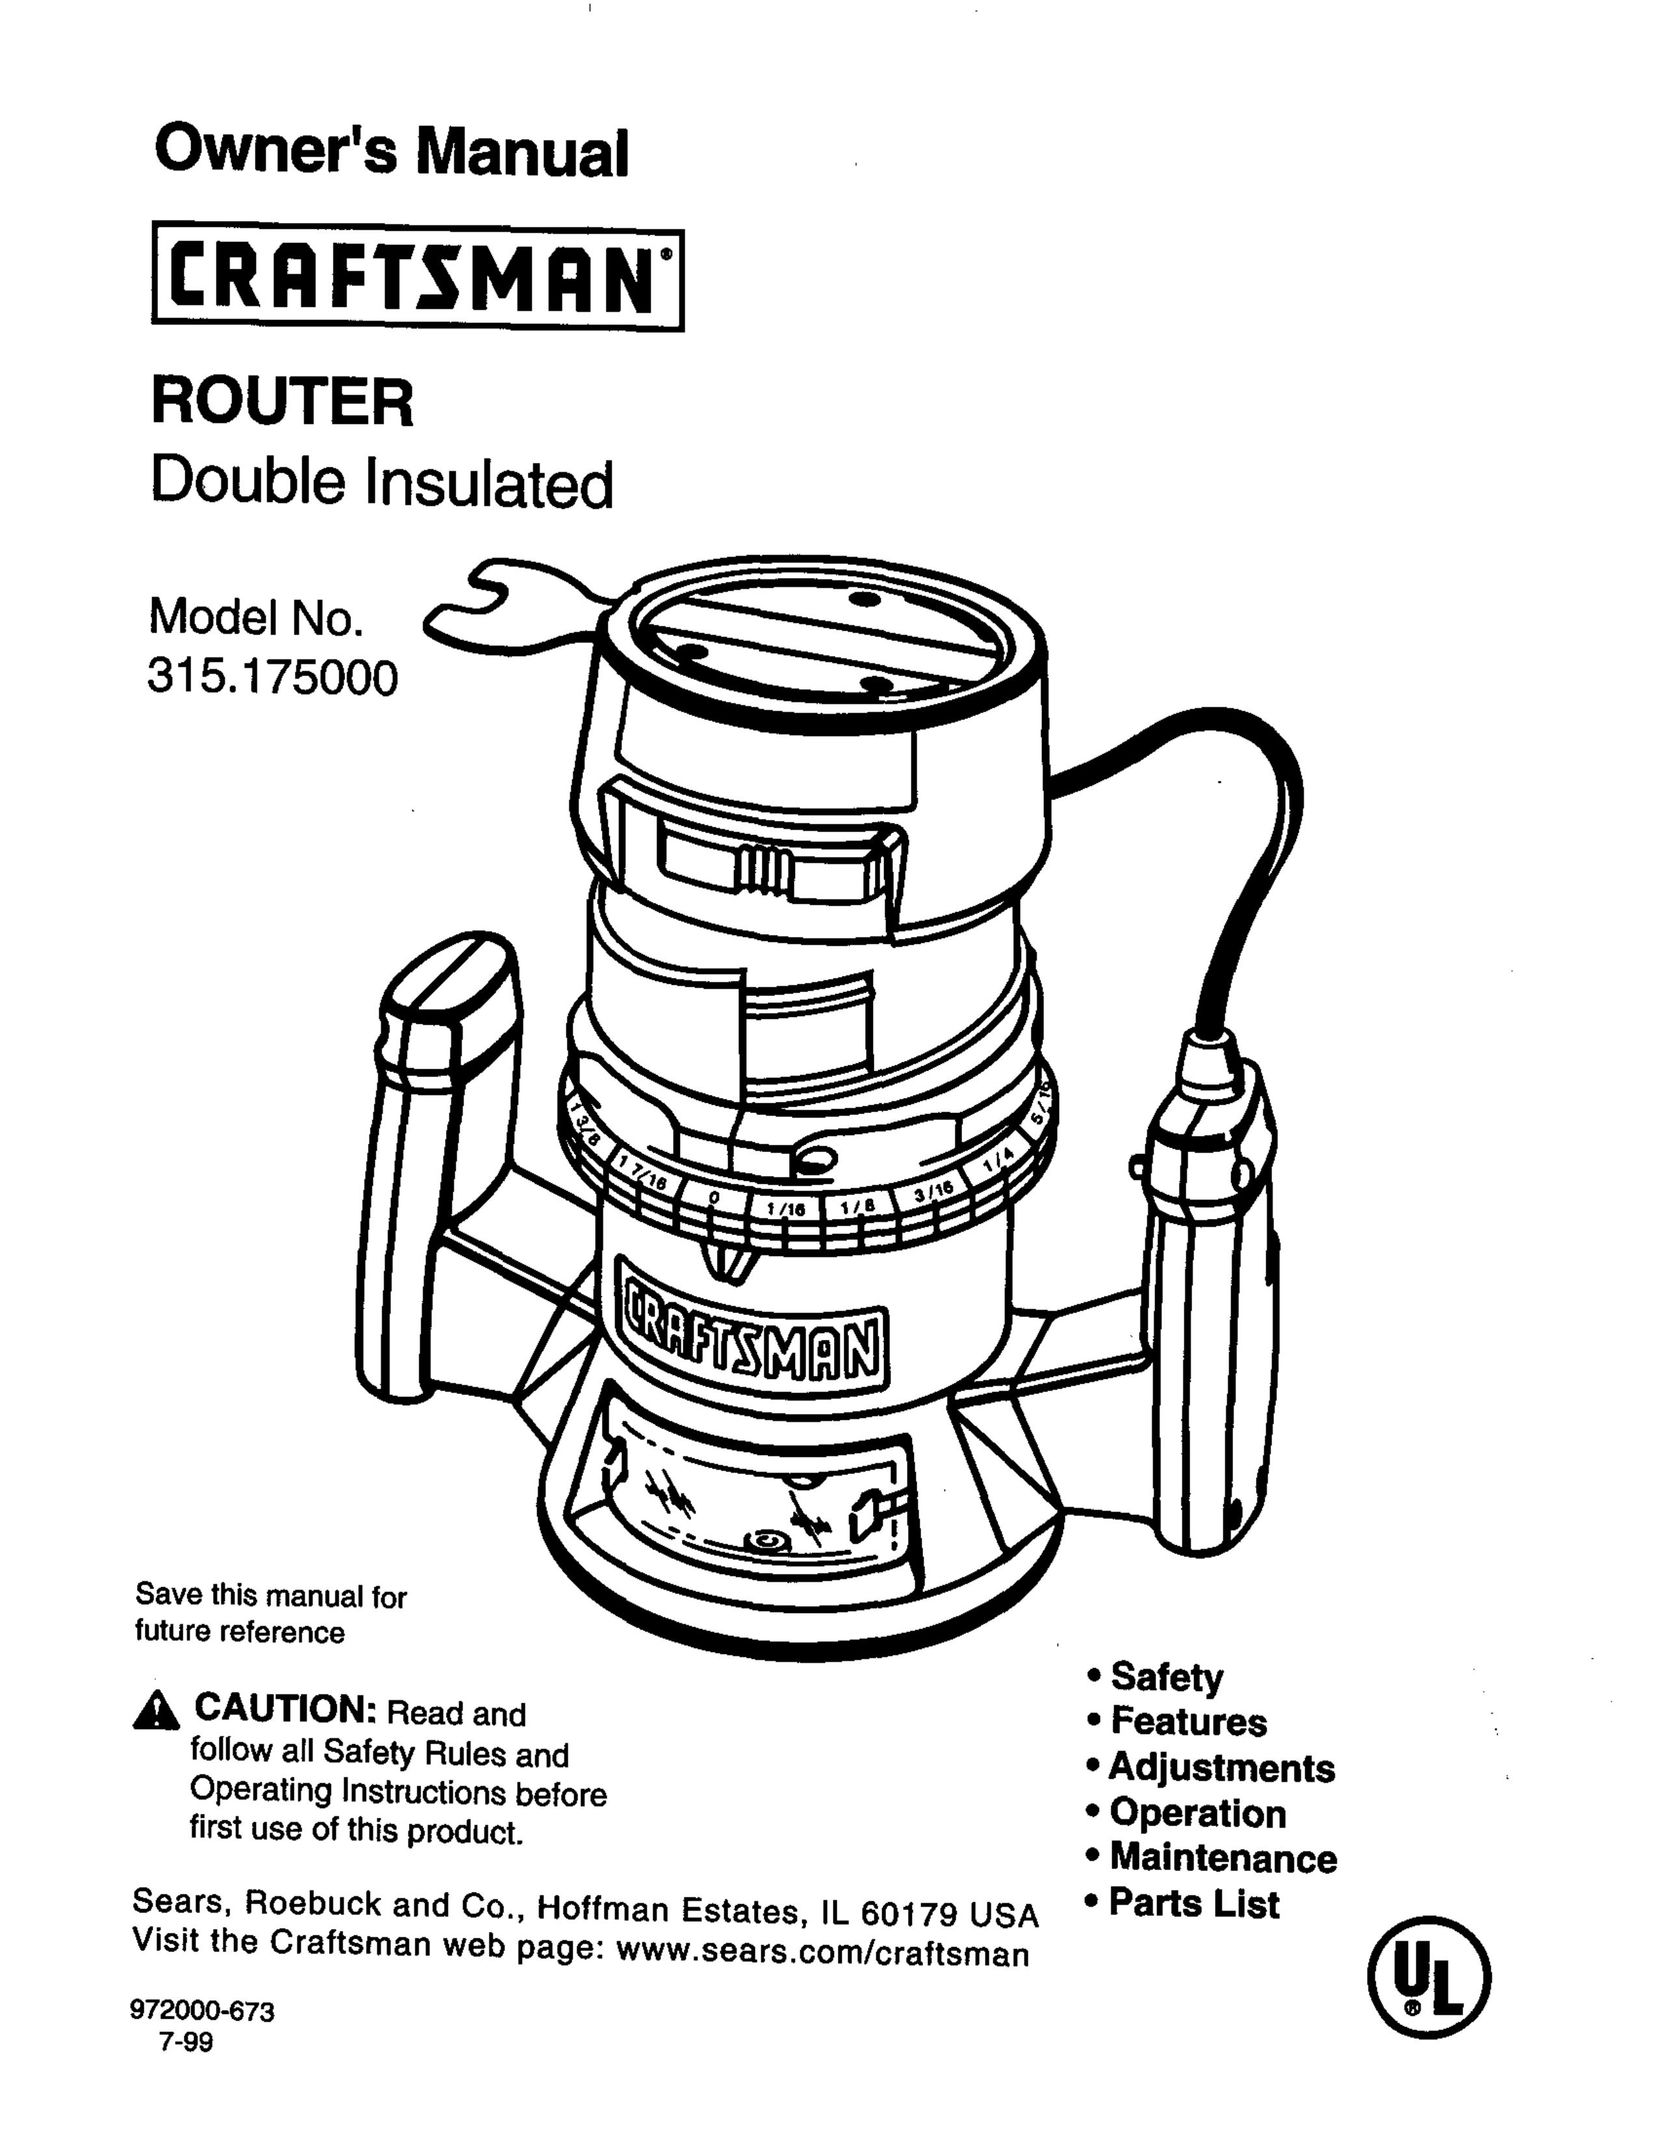 Craftsman 315.175 Router User Manual